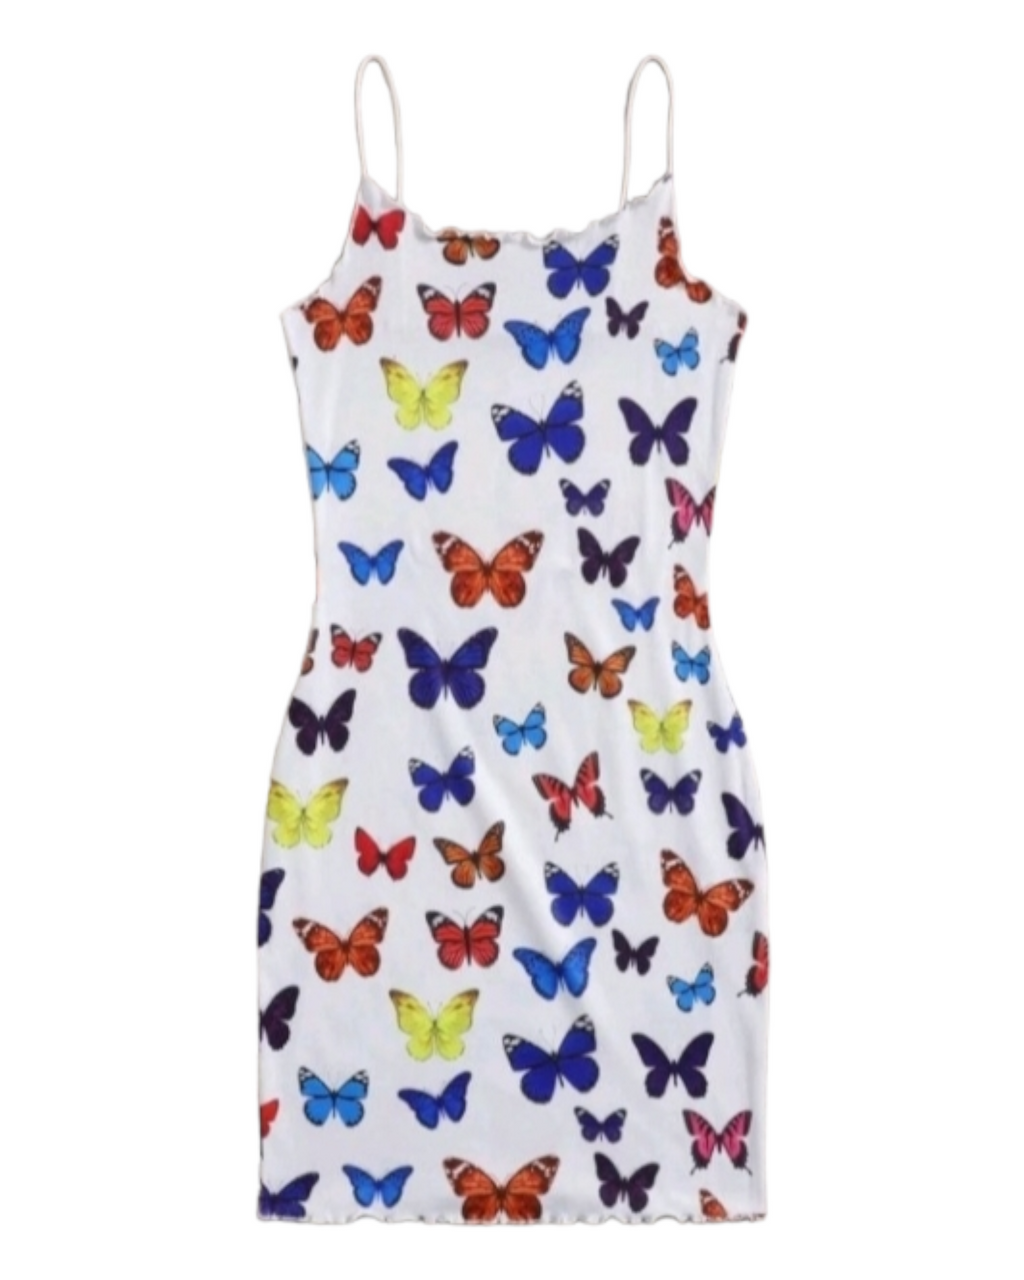 Butterfly print dress